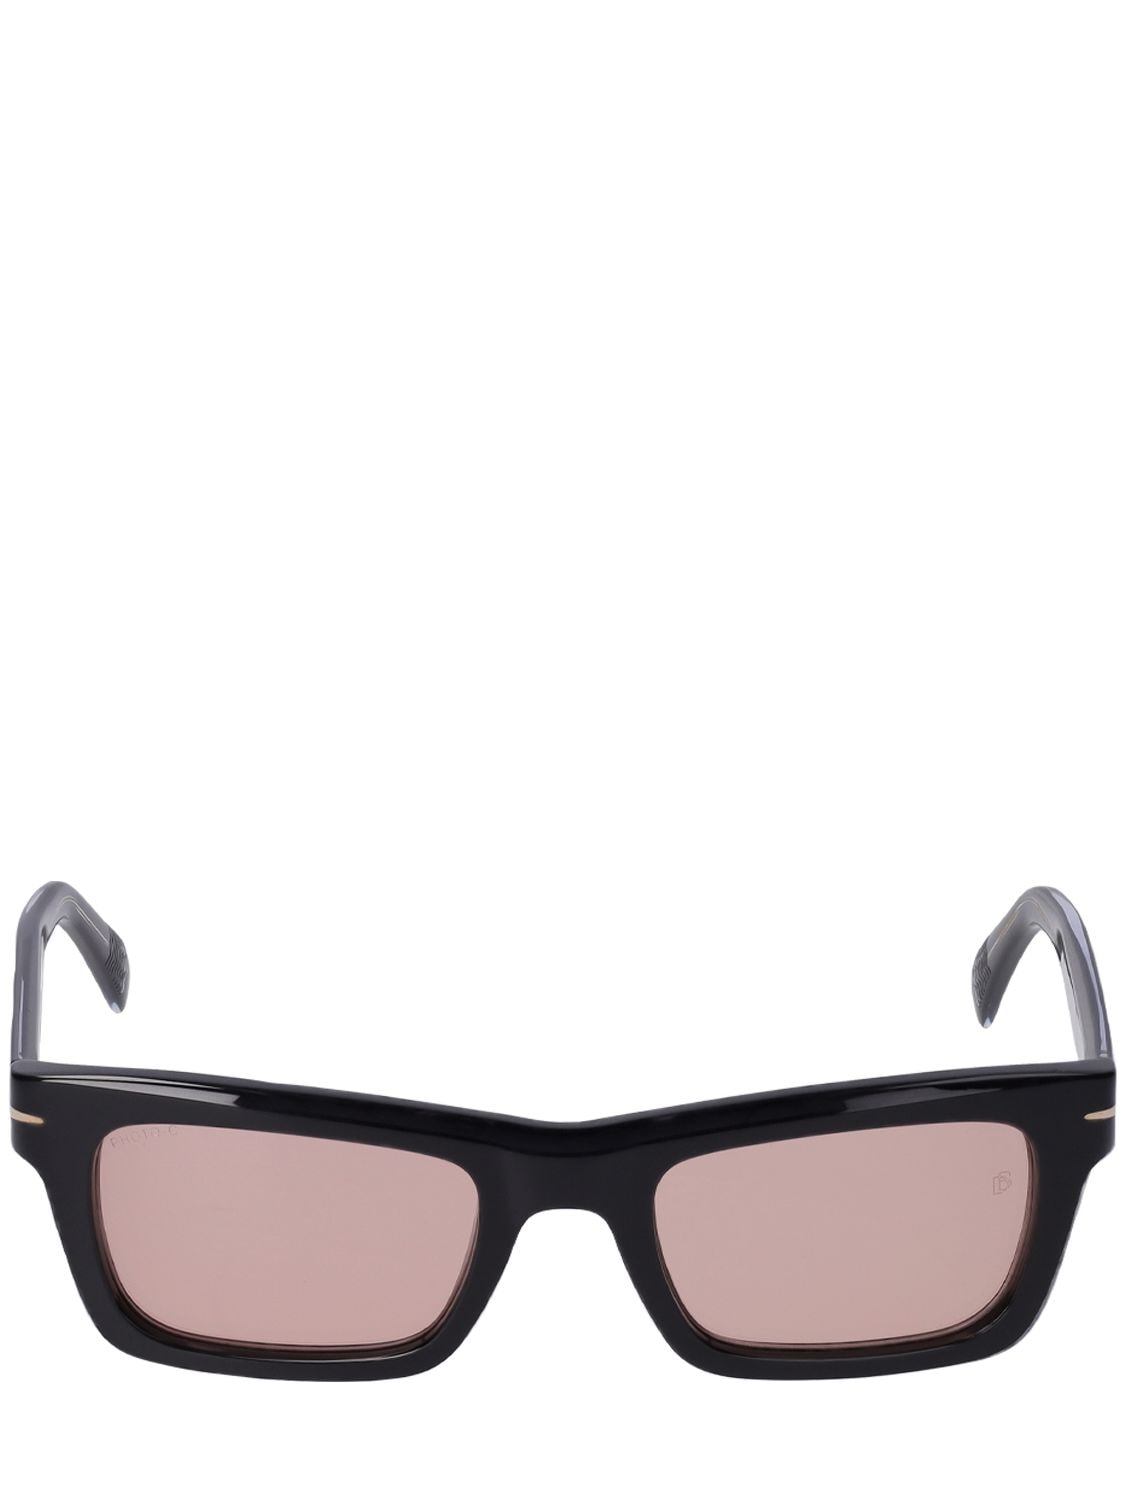 Image of Db Squared Acetate Sunglasses